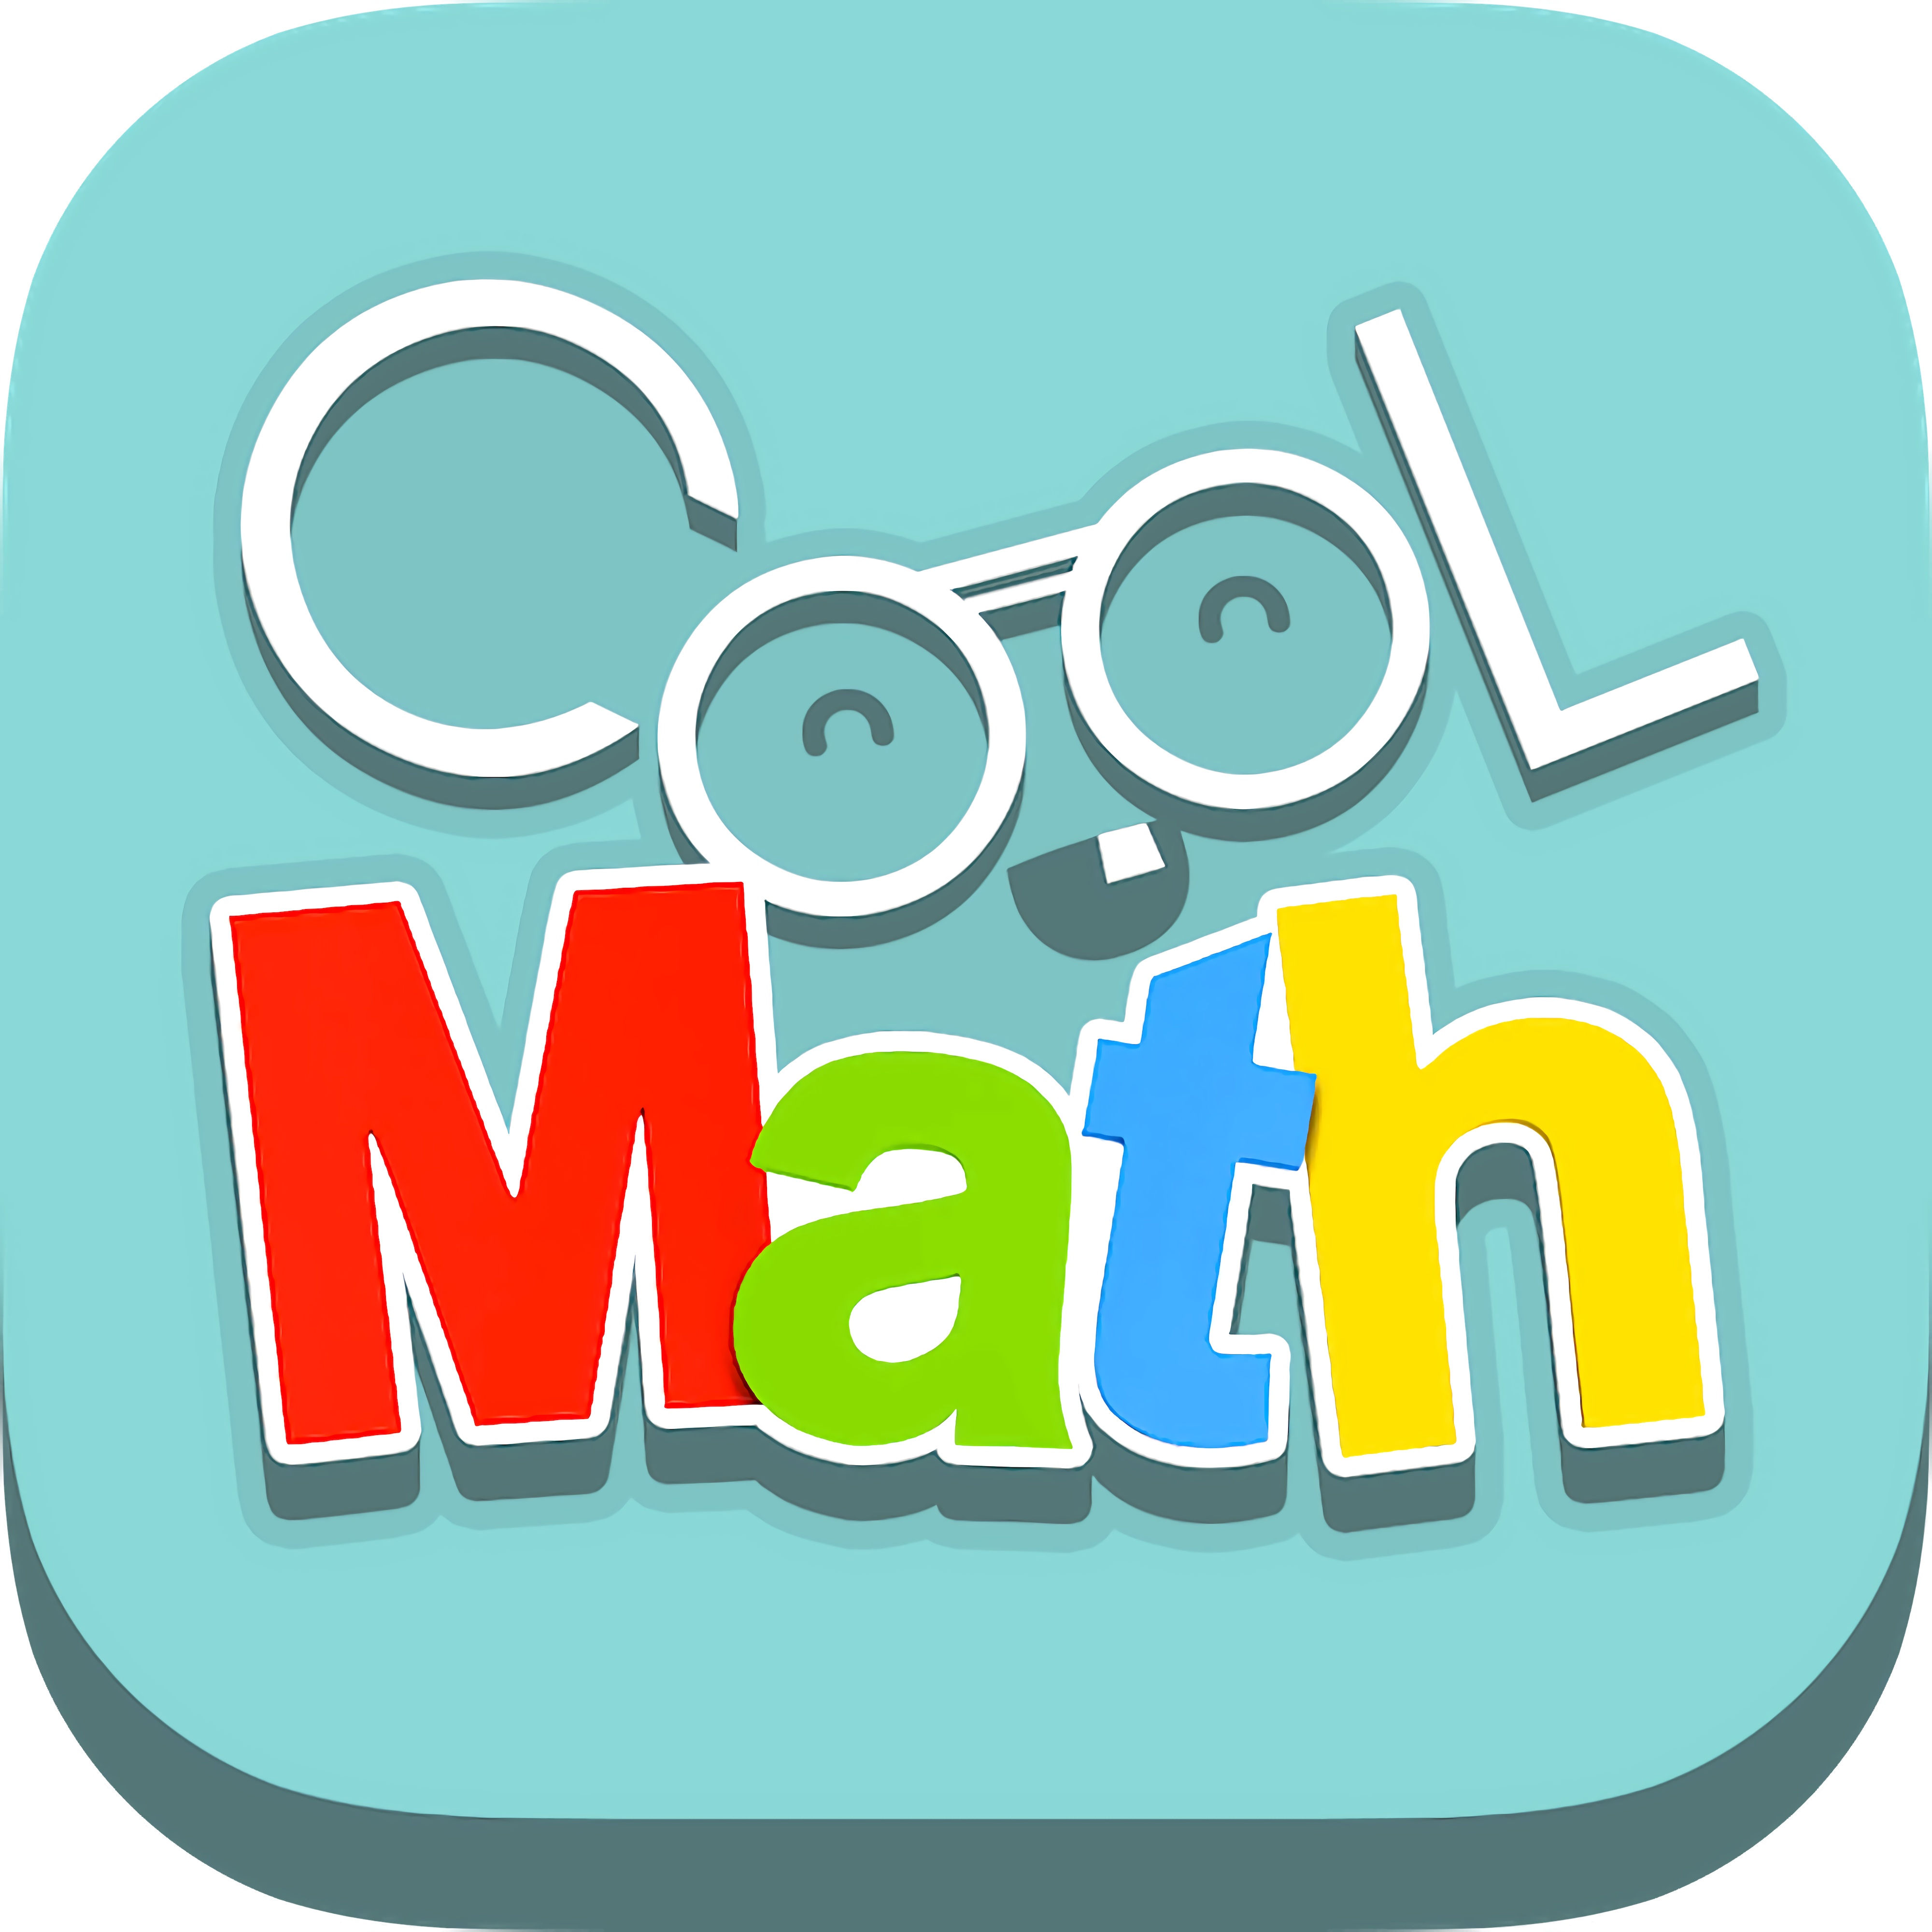 Cool Math Games - Play Online New Cool Math Games on Desura